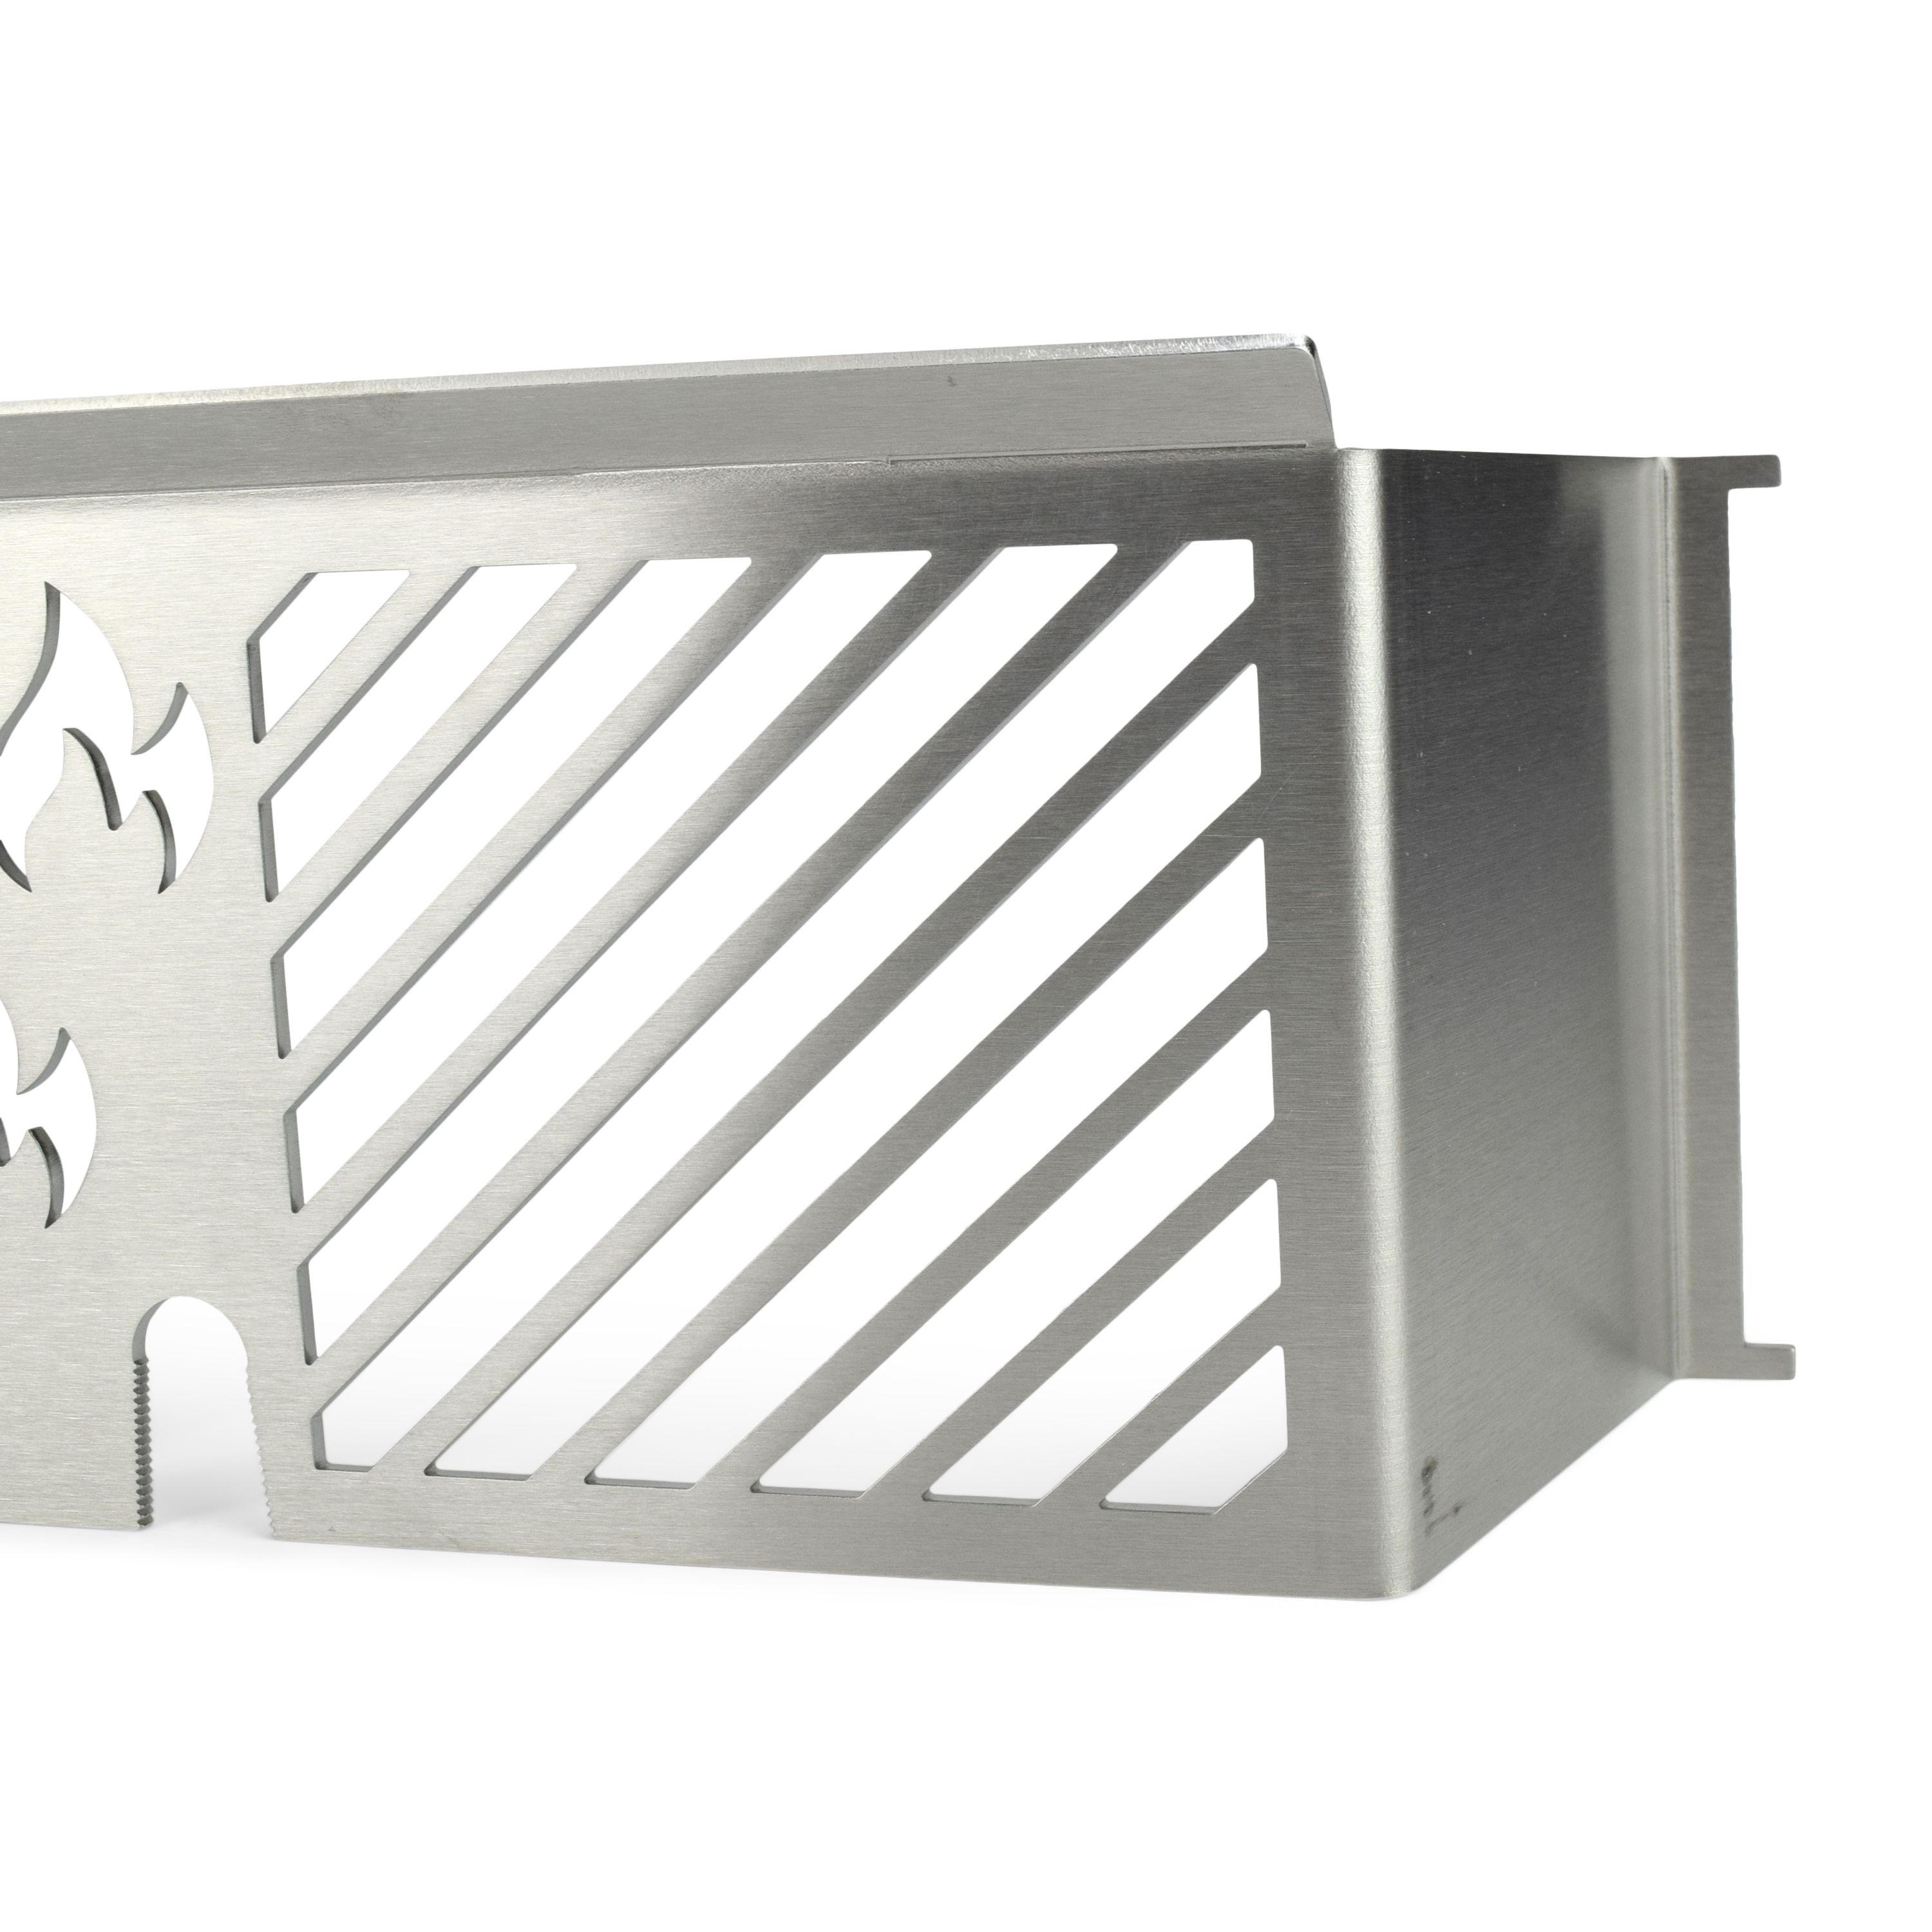 Stainless steel MultiStation for Weber Genesis 300 - Hot grid